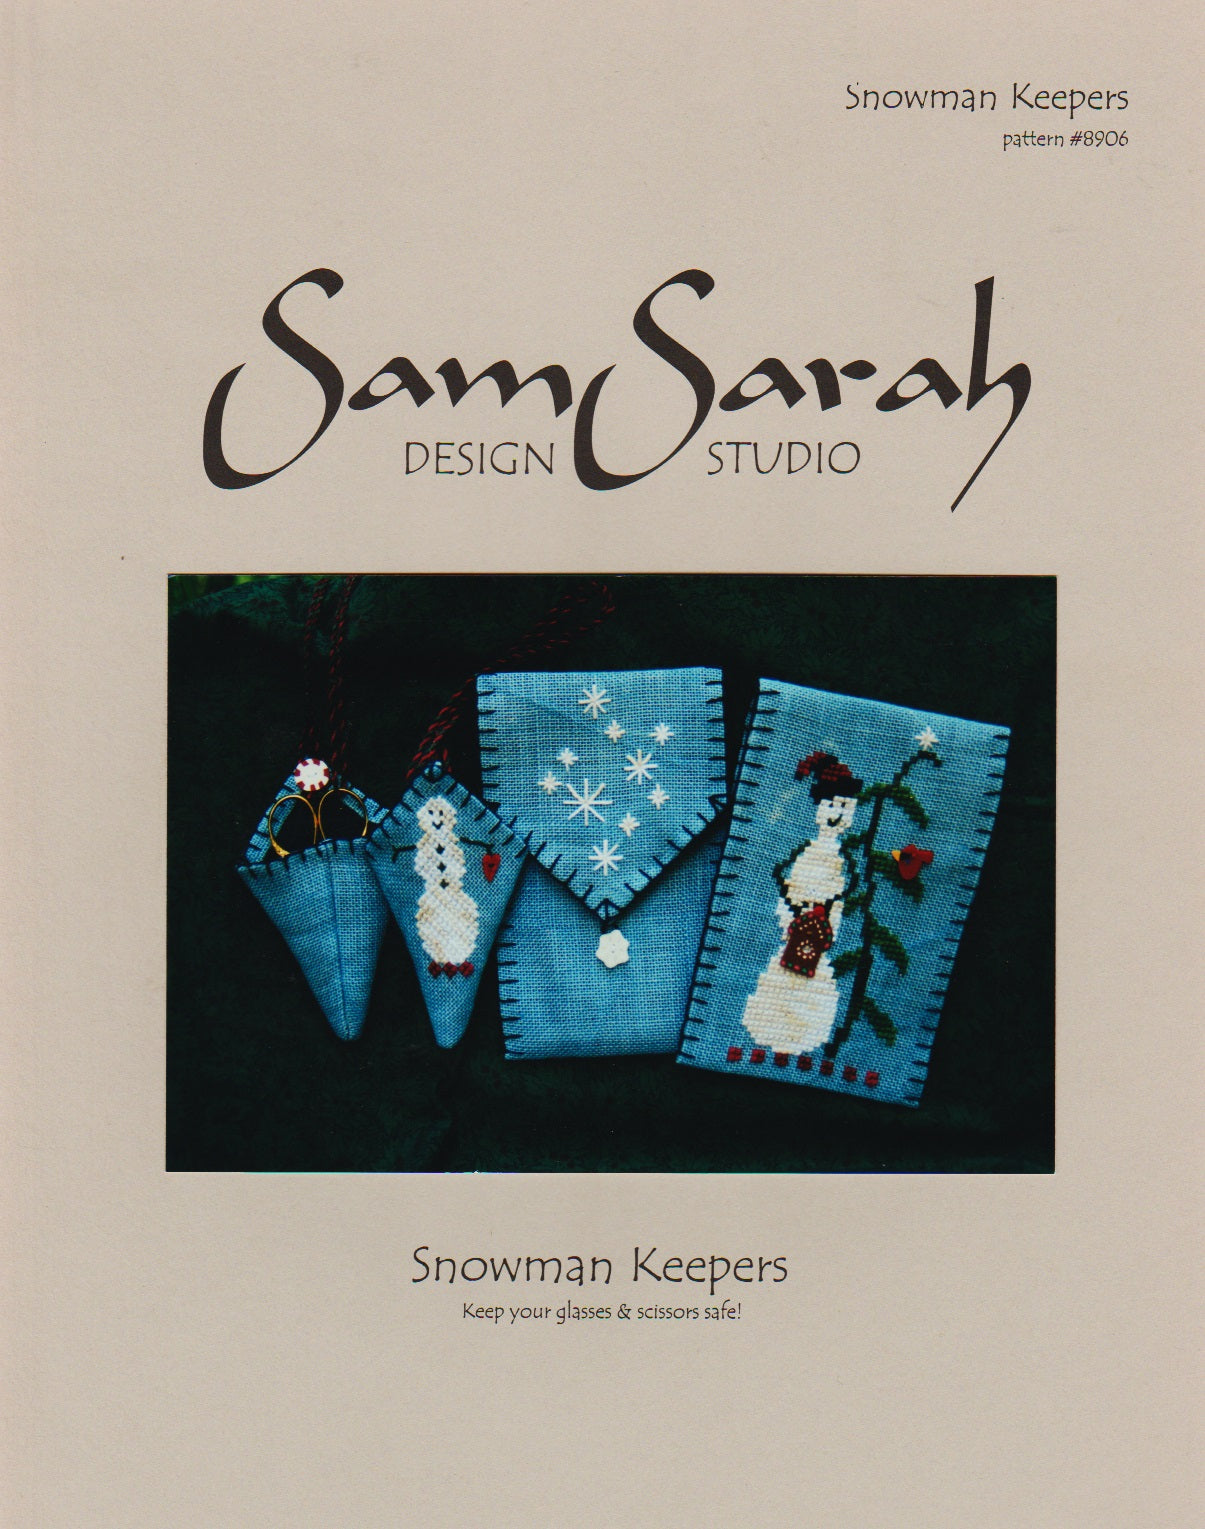 Sam Sarah Snowman Keepers cros stitch pattern